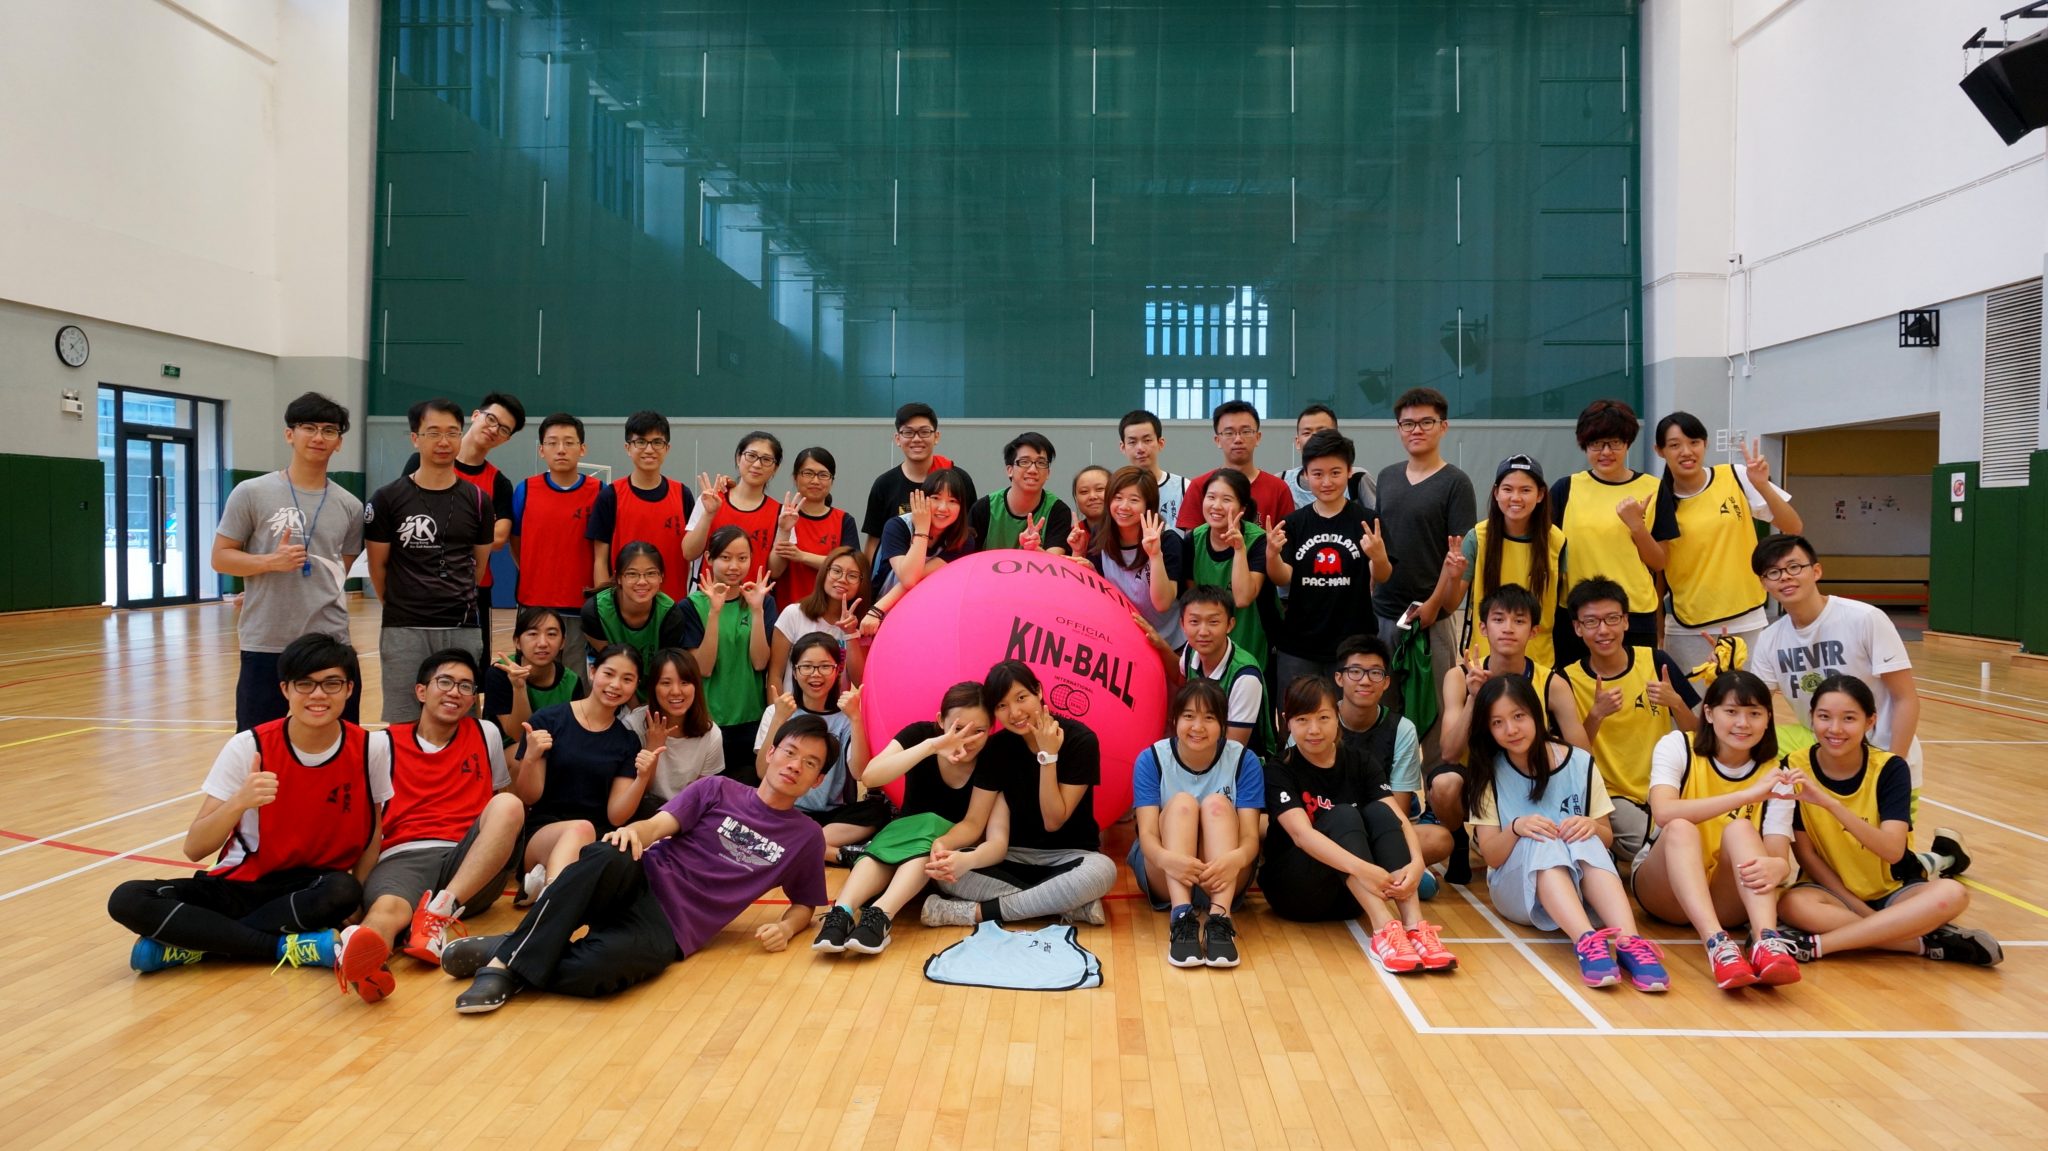 Group photo of the SHEAC student leadership team with the Hong Kong Kin-Ball Association President and coach. 健球活動後與香港健球總會教練大合照